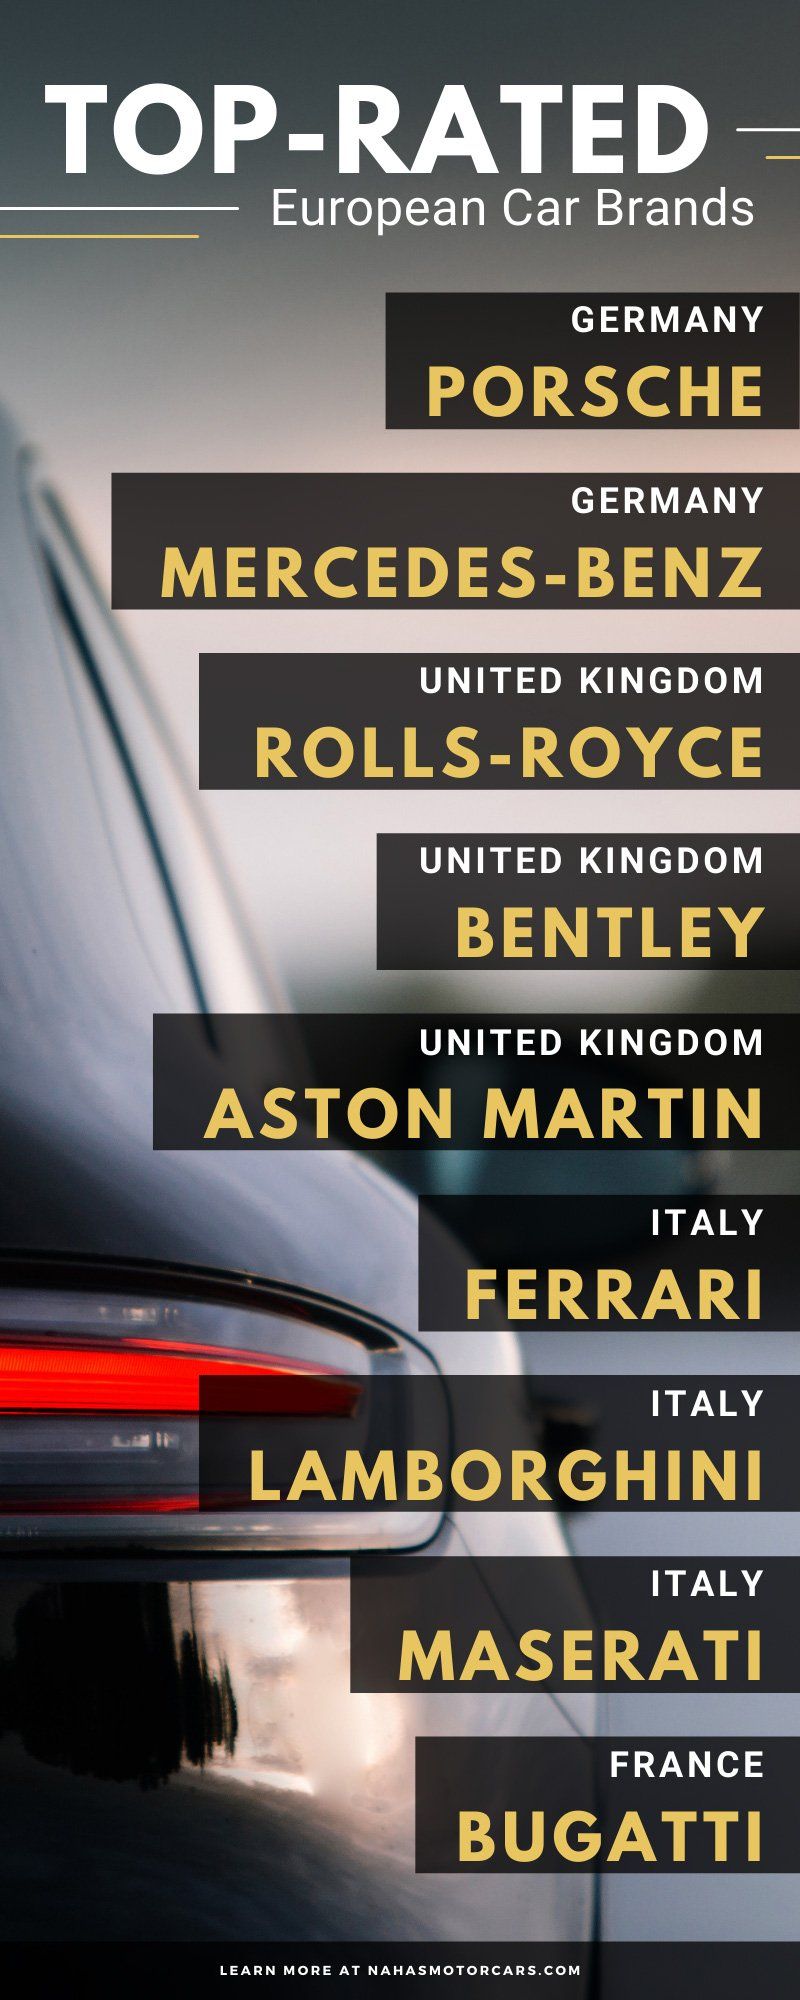 Top-Rated European Car Brands